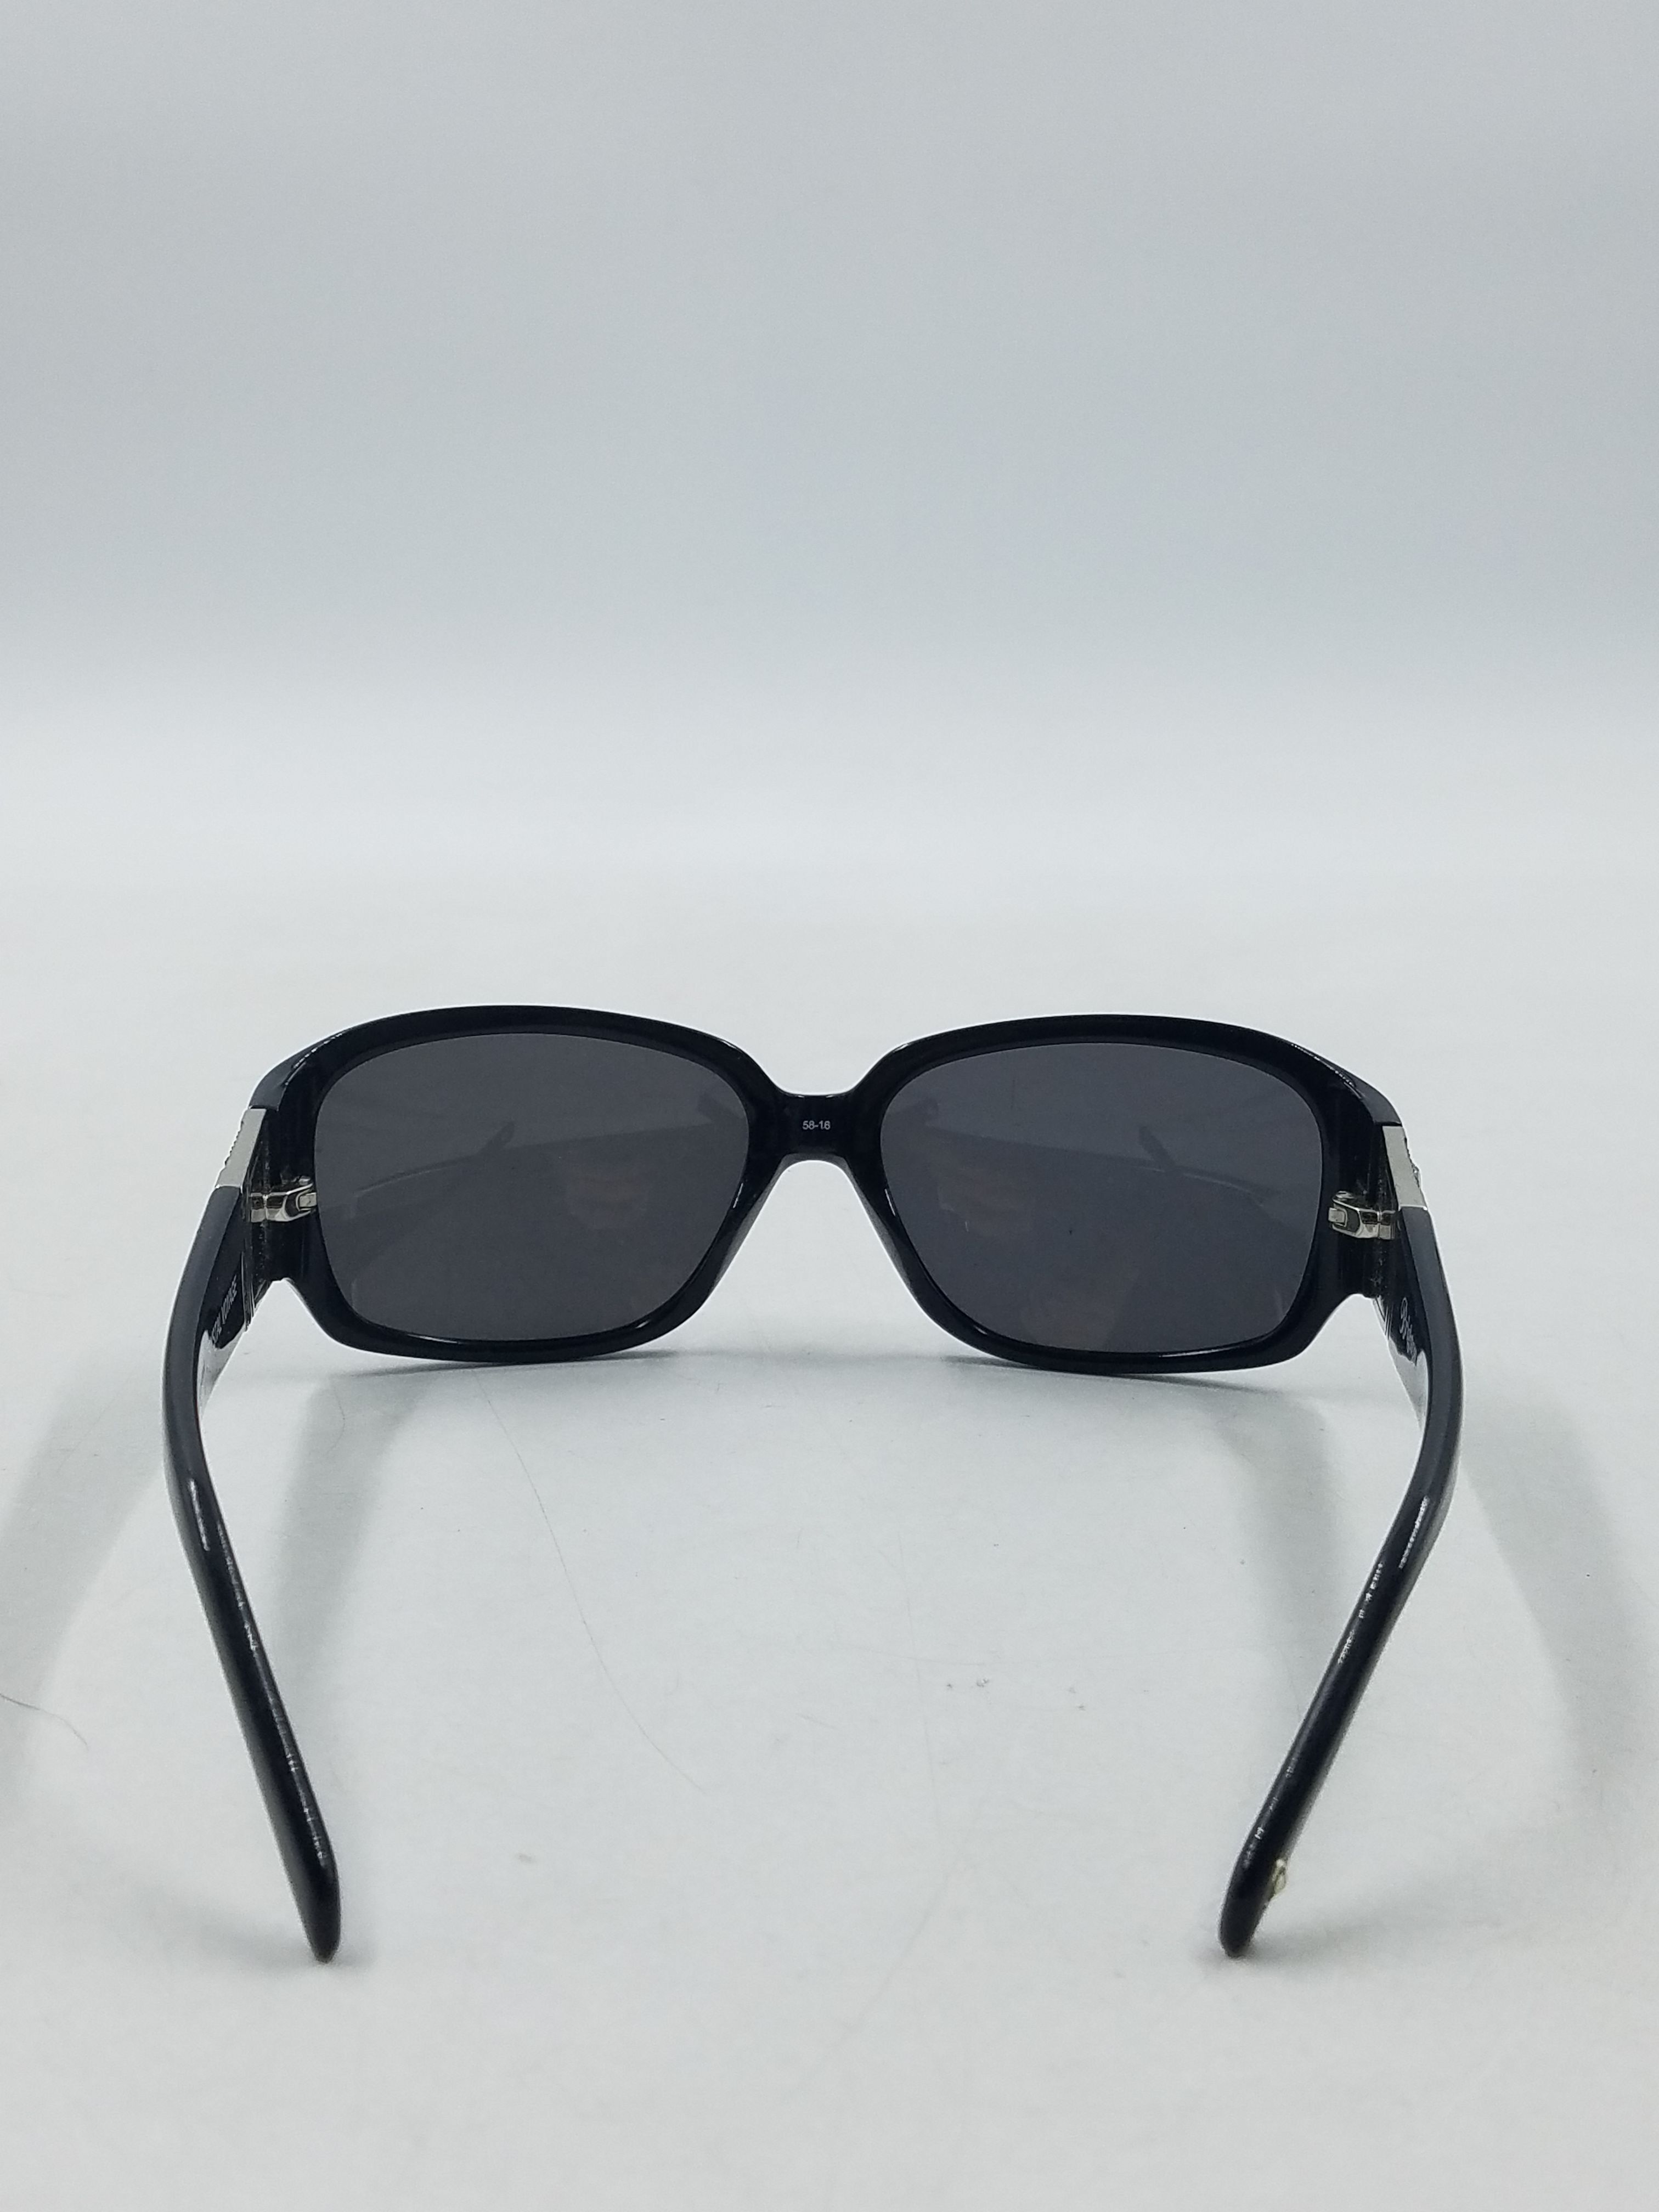 Details more than 153 voyage rectangular sunglasses best